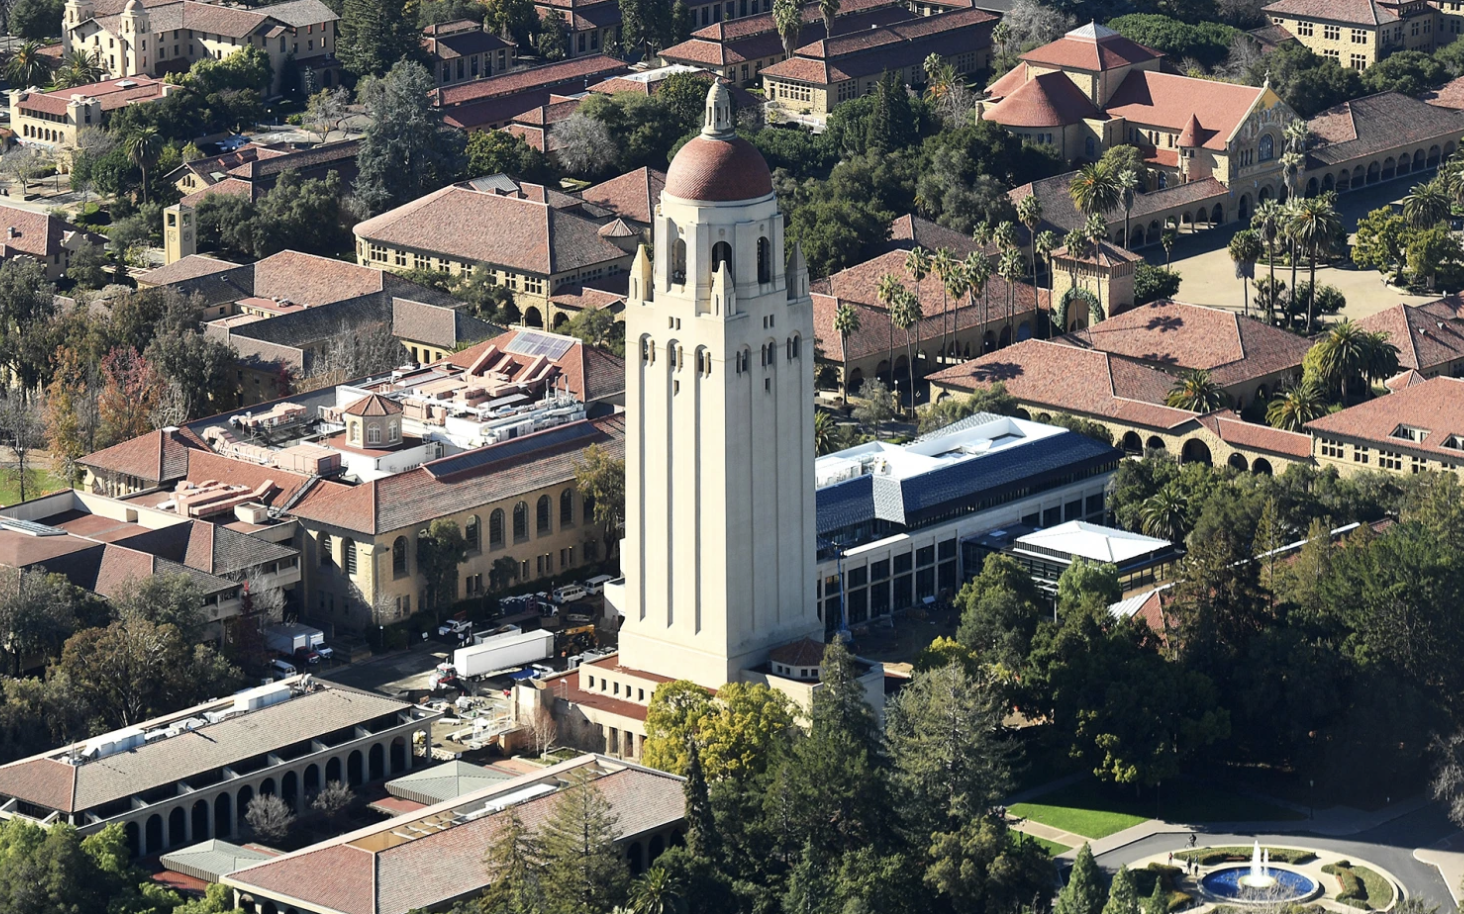 Stanford University Campus